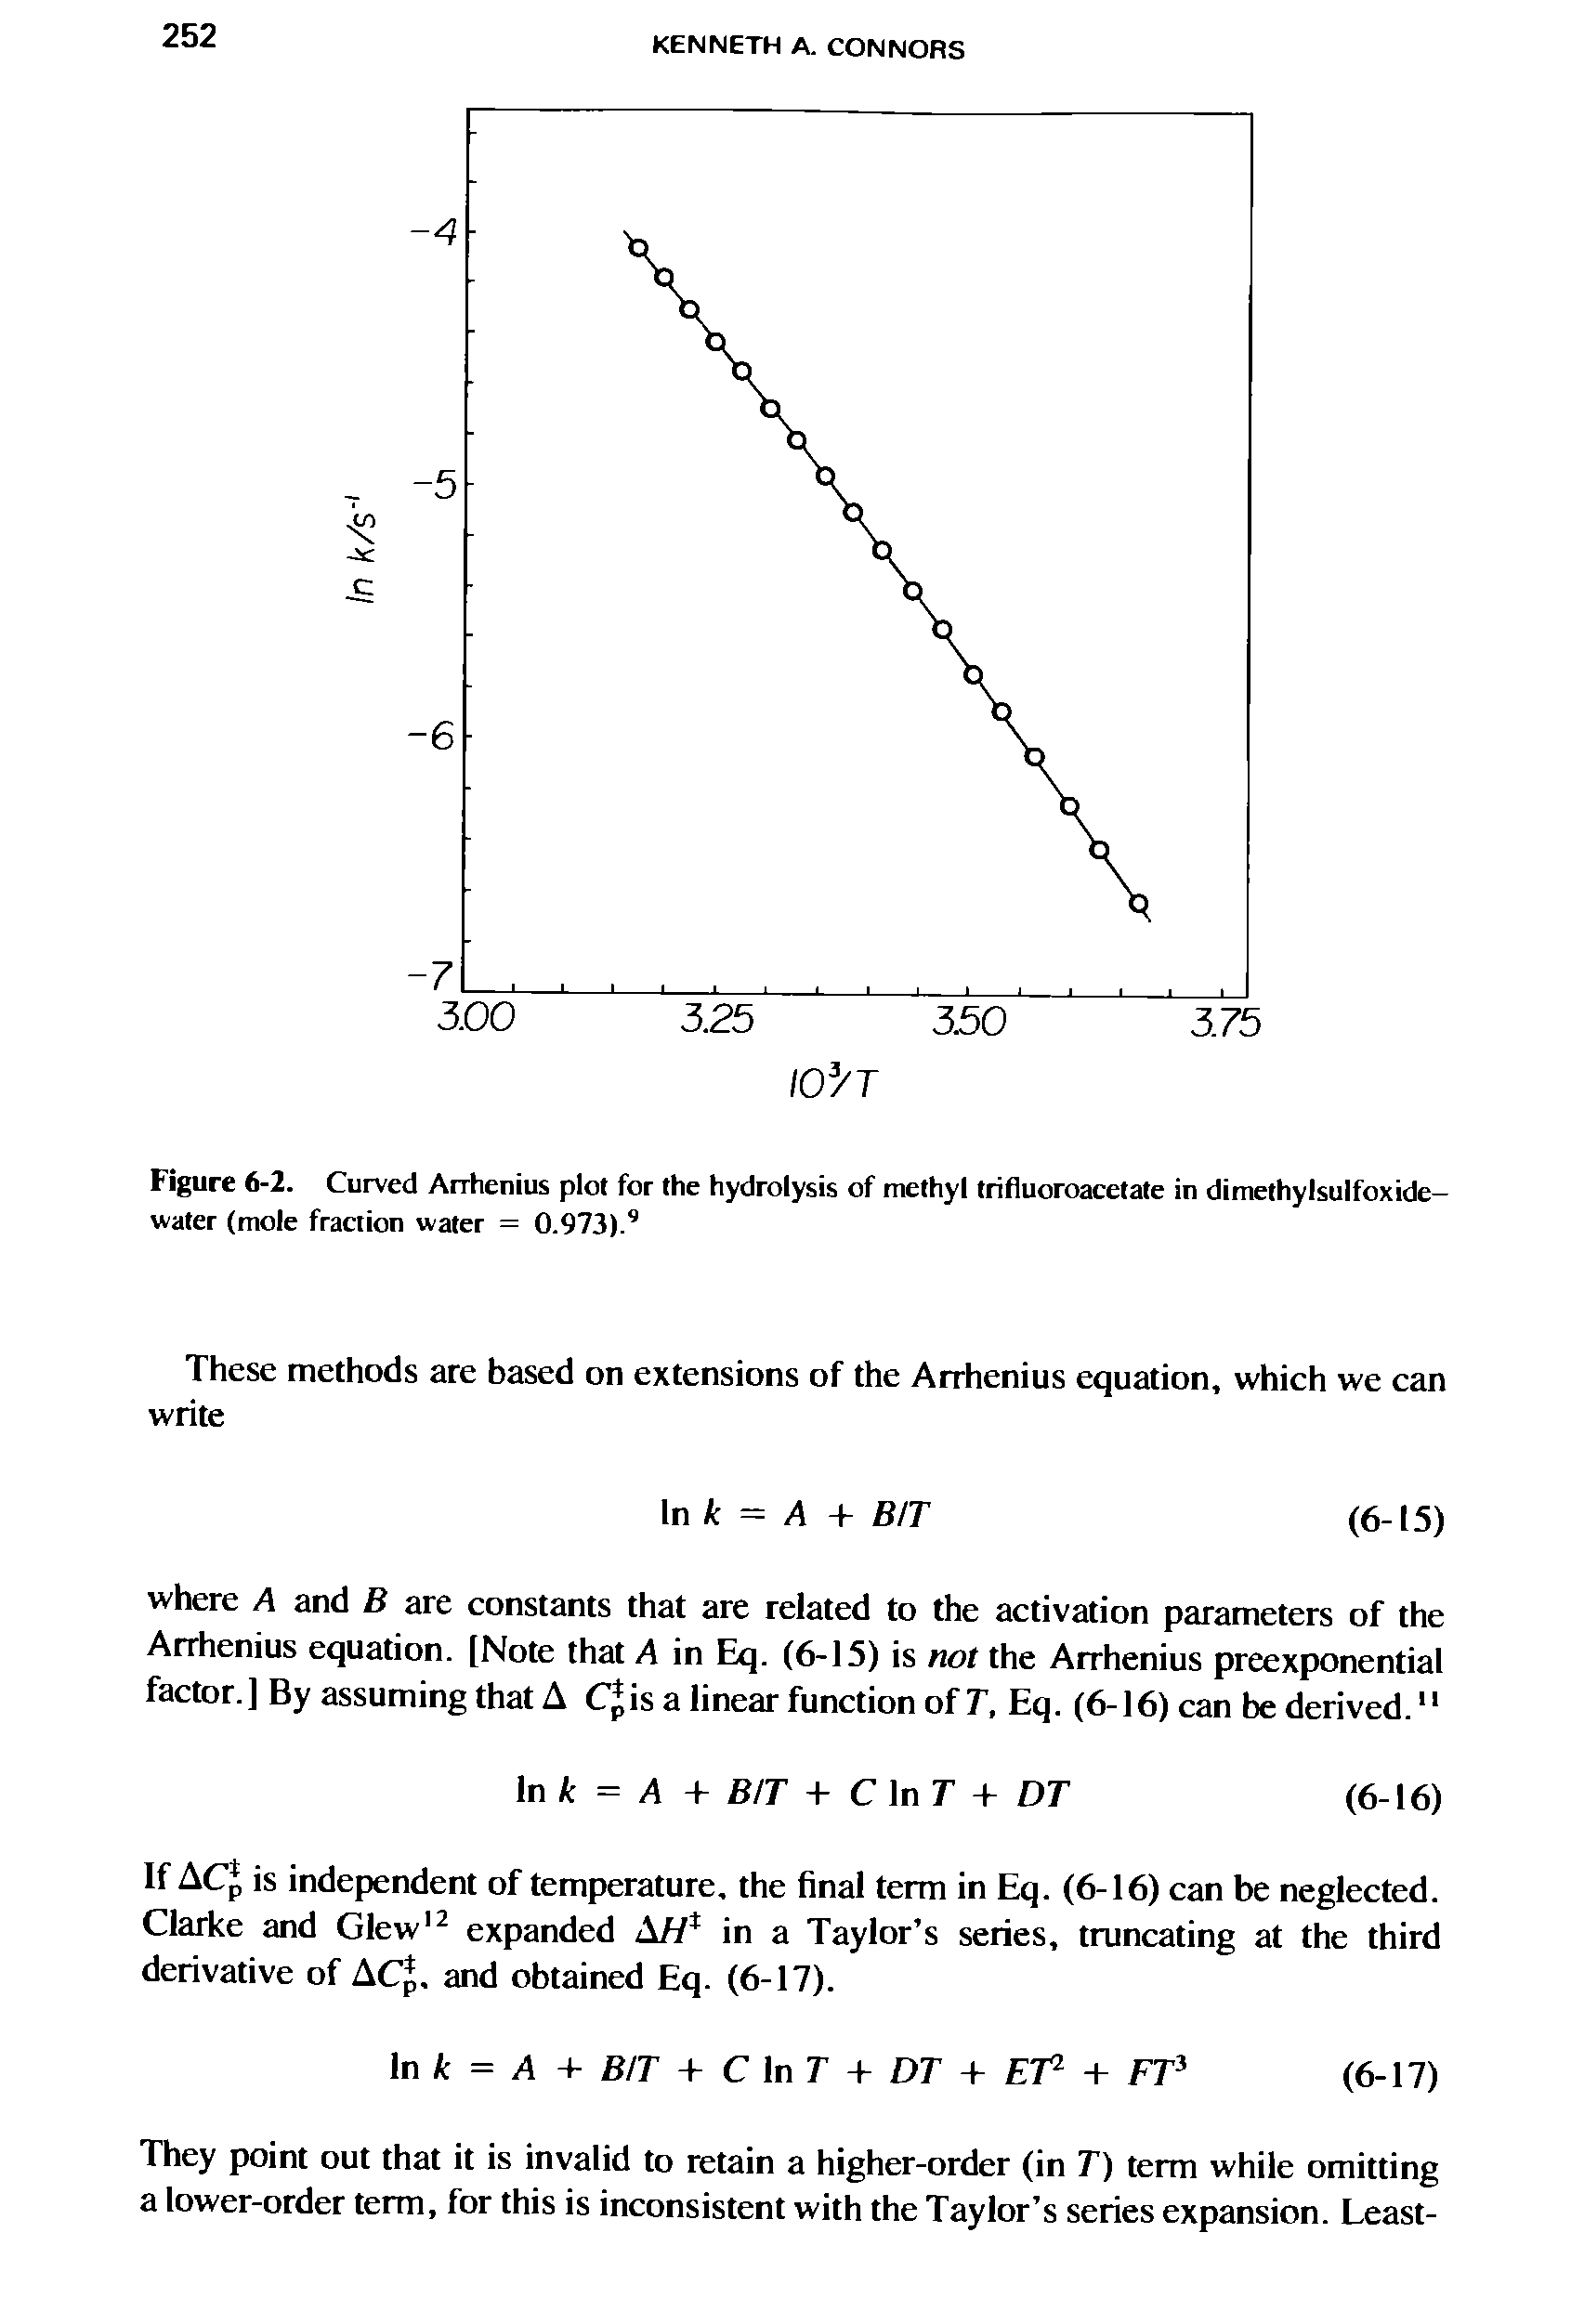 Figure 6-2. Curved Arrhenius plot for the hydrolysis of methyl trifluoroacetate in dimethylsulfoxide-water (mole fraction water = 0.973). ...